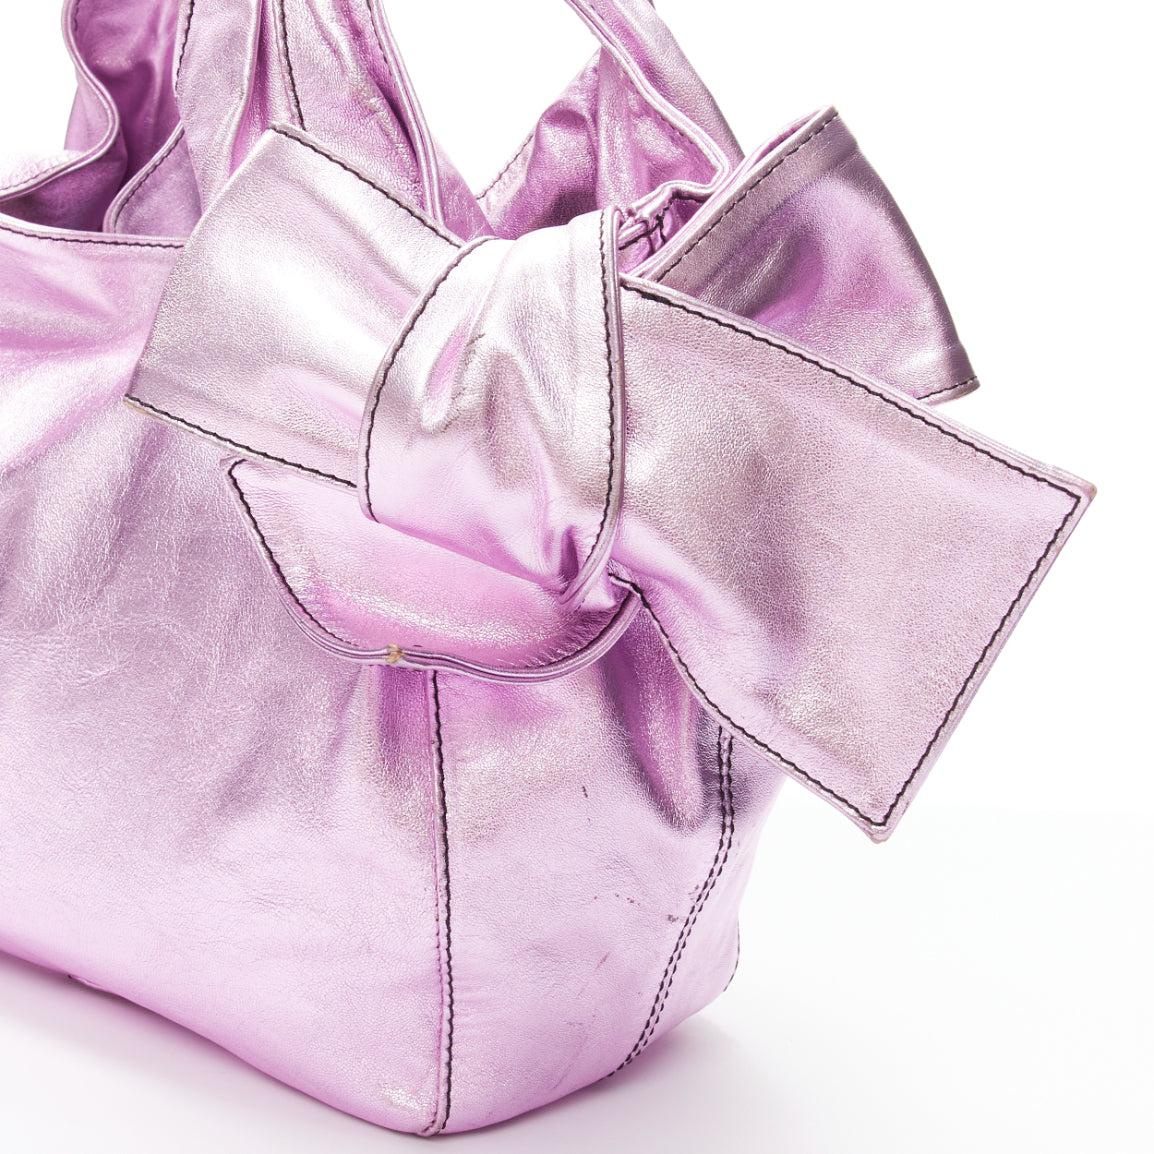 VALENTINO GARAVANI metallic purple leather bow detail hobo tote bag For Sale 3